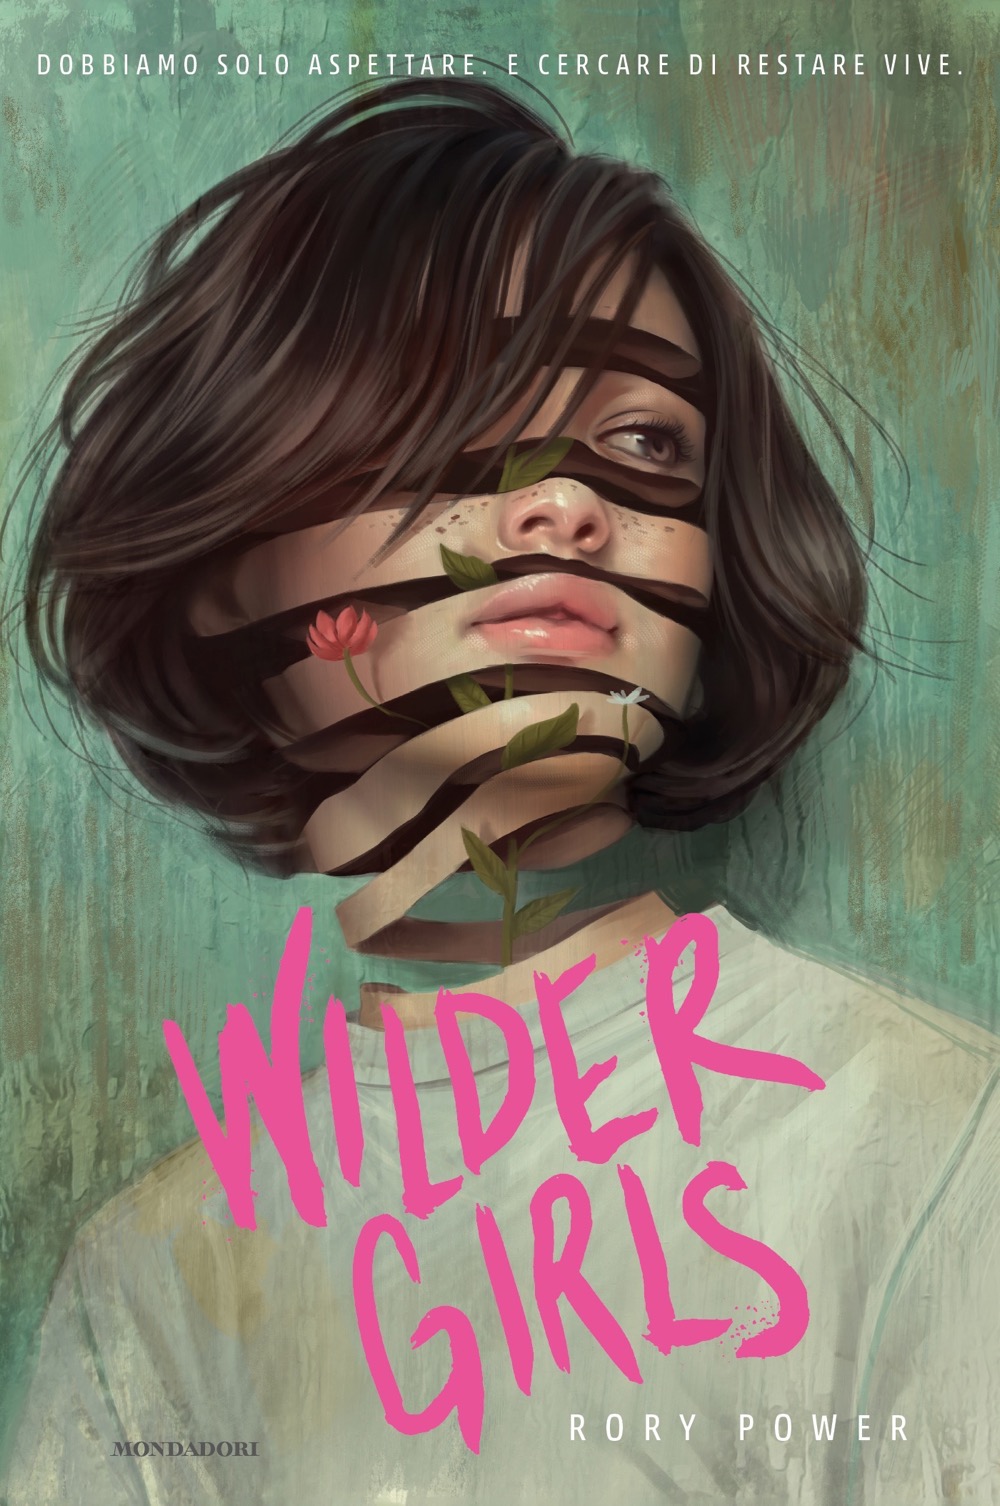 Recensione: Wilder Girls di Rory Power.